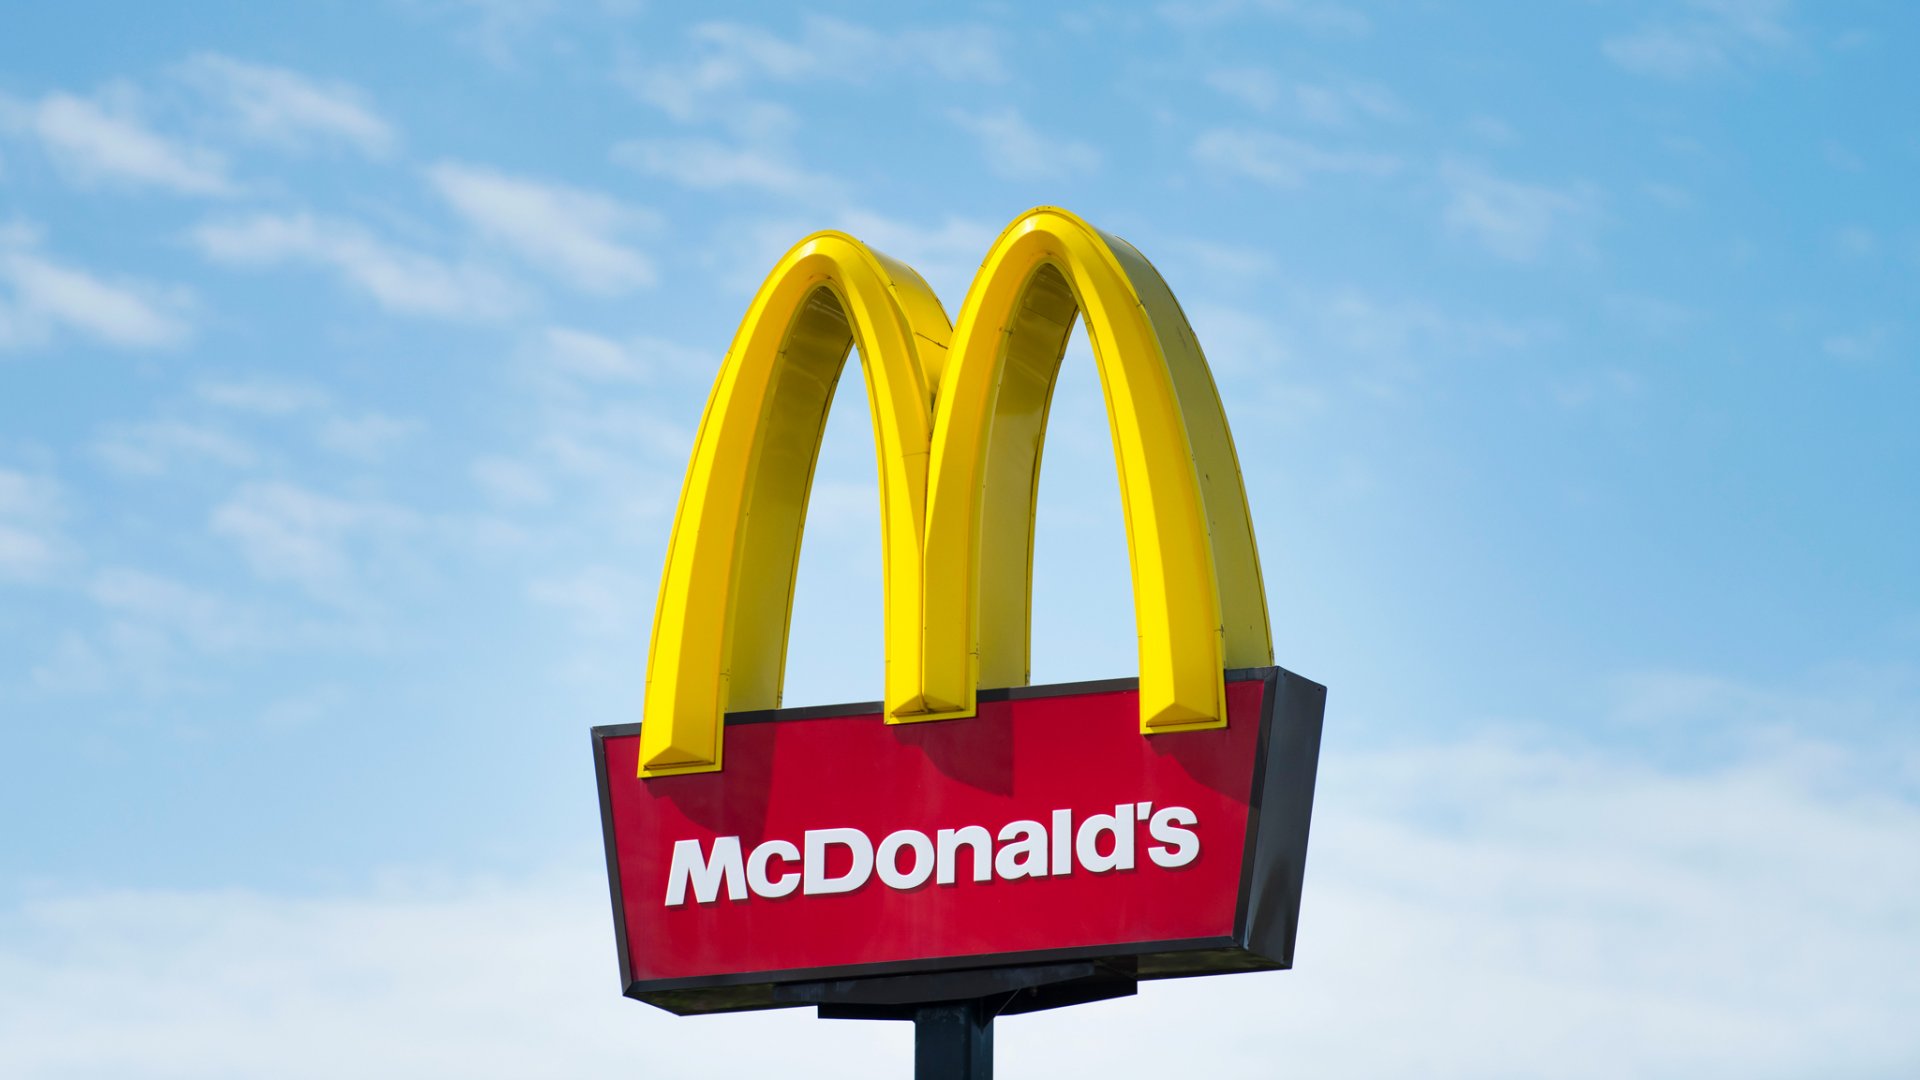 McDonald's anuncia mudança de planos nos Estados Unidos | Mercado&Consumo